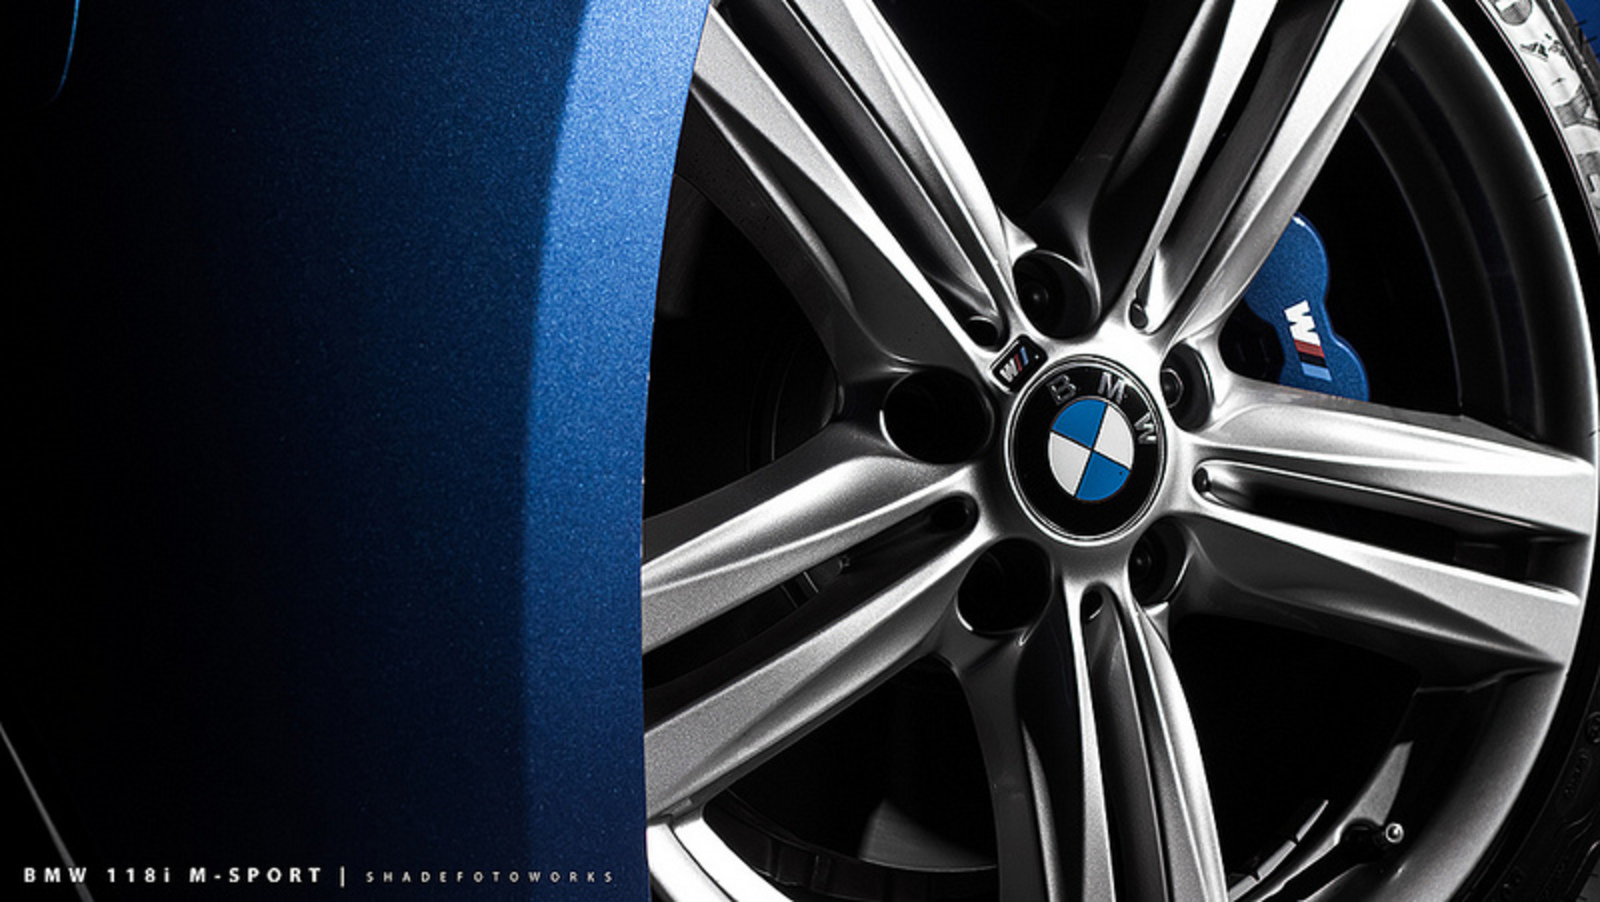 BMW 118i M-Sport. | Flickr - Photo Sharing!